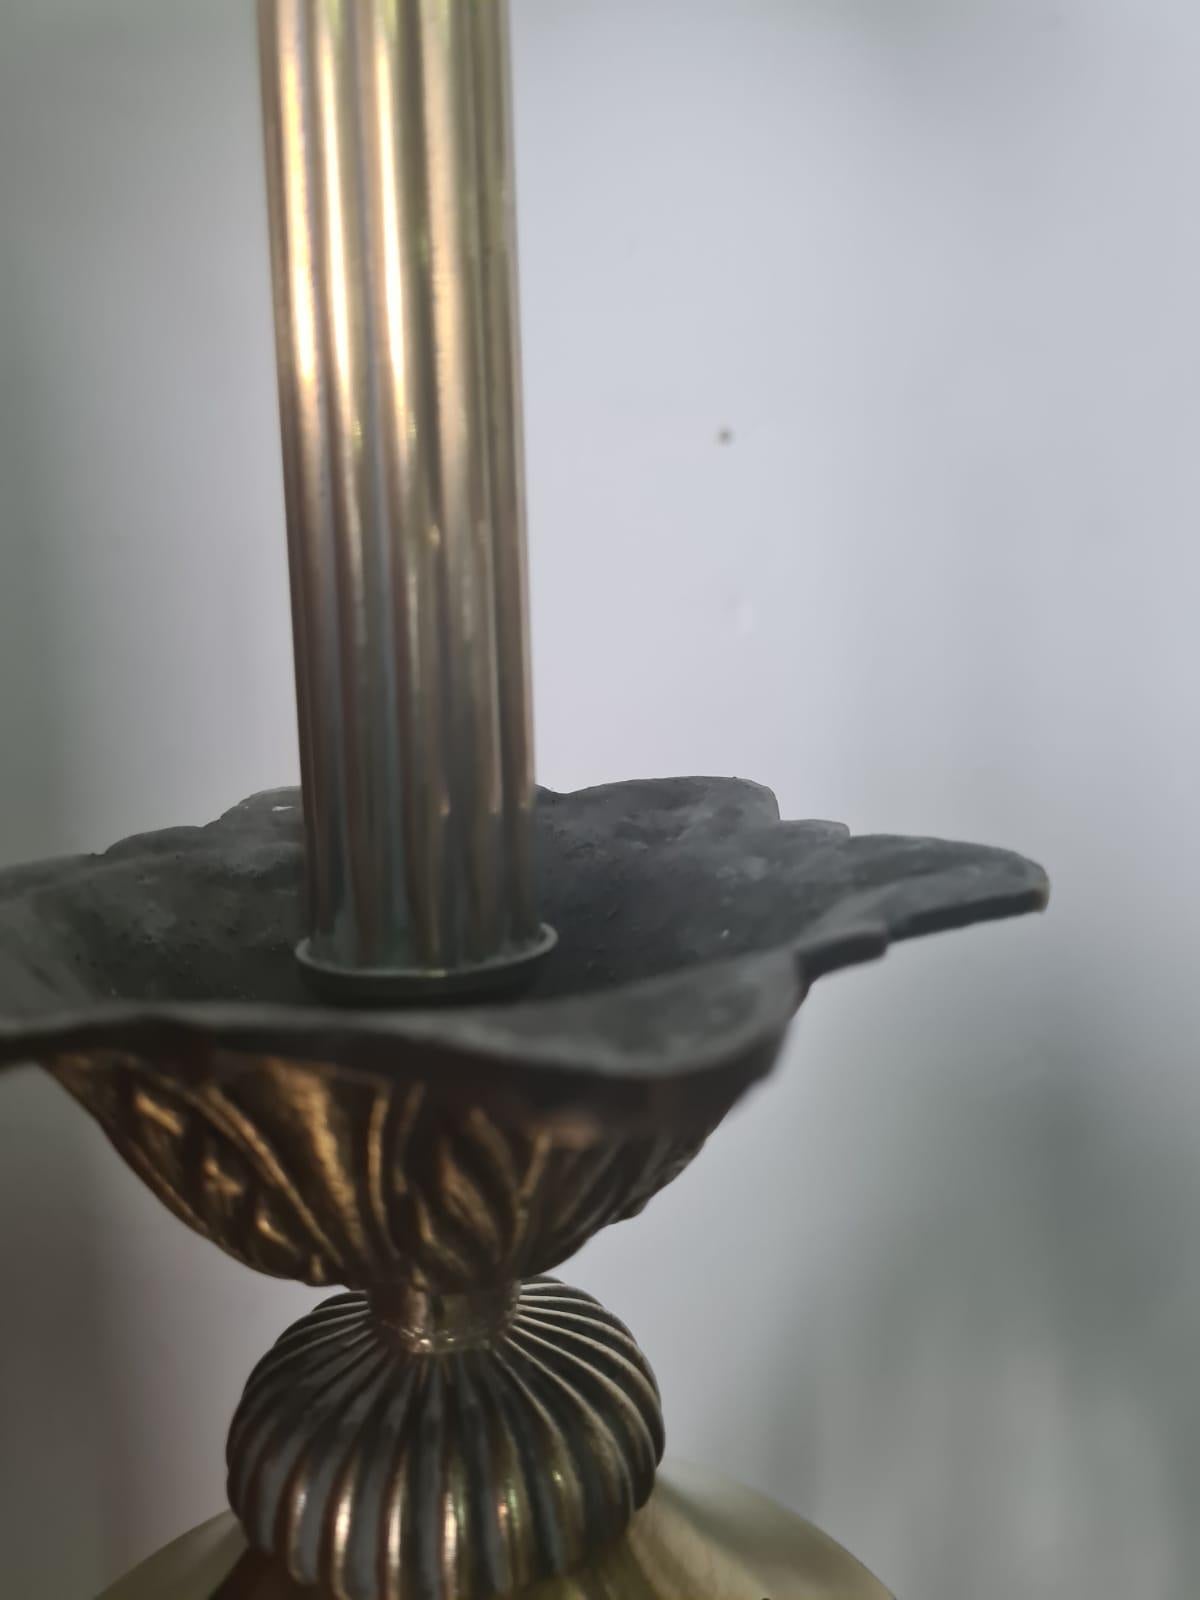 3-light brass and glass chandelier produced in circa 1950 by the architect Luigi Caccia Dominioni.